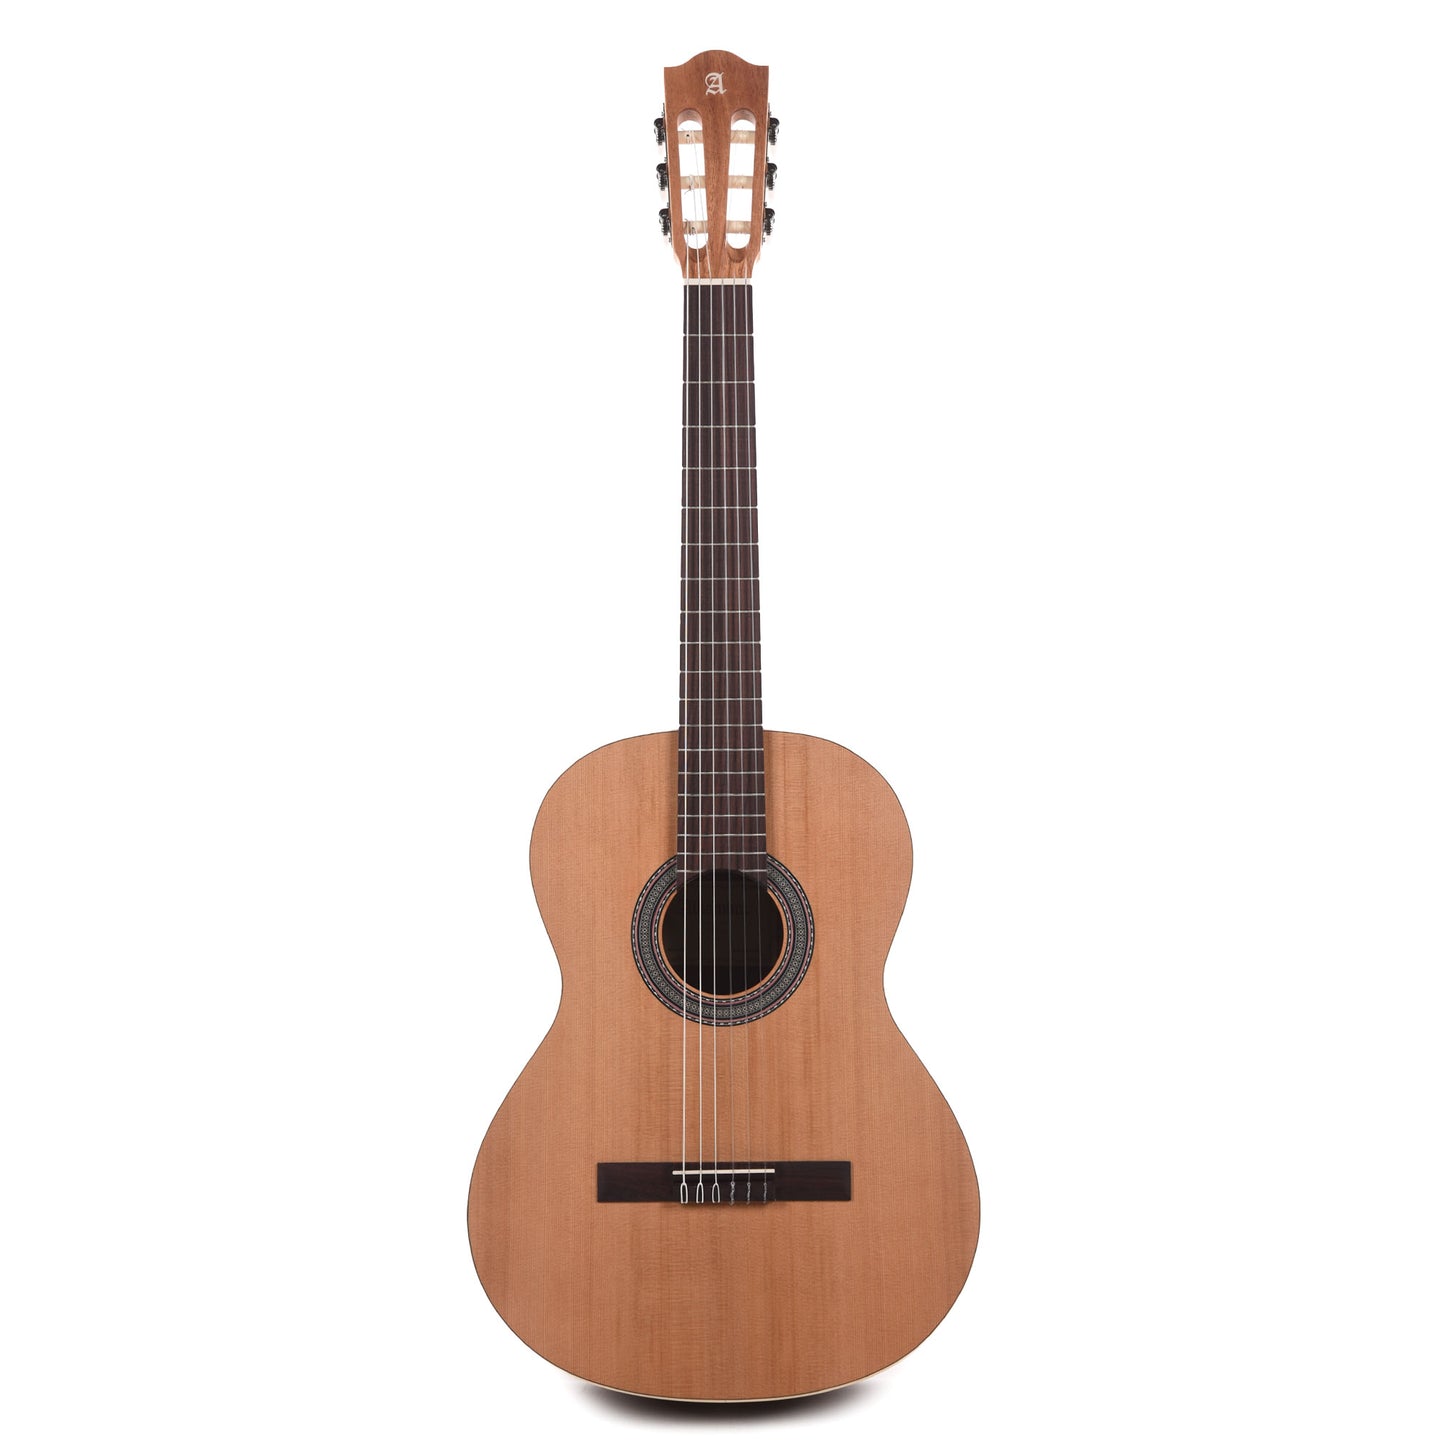 Alhambra 1OP Studio Classical Nylon String Acoustic Guitar Natural